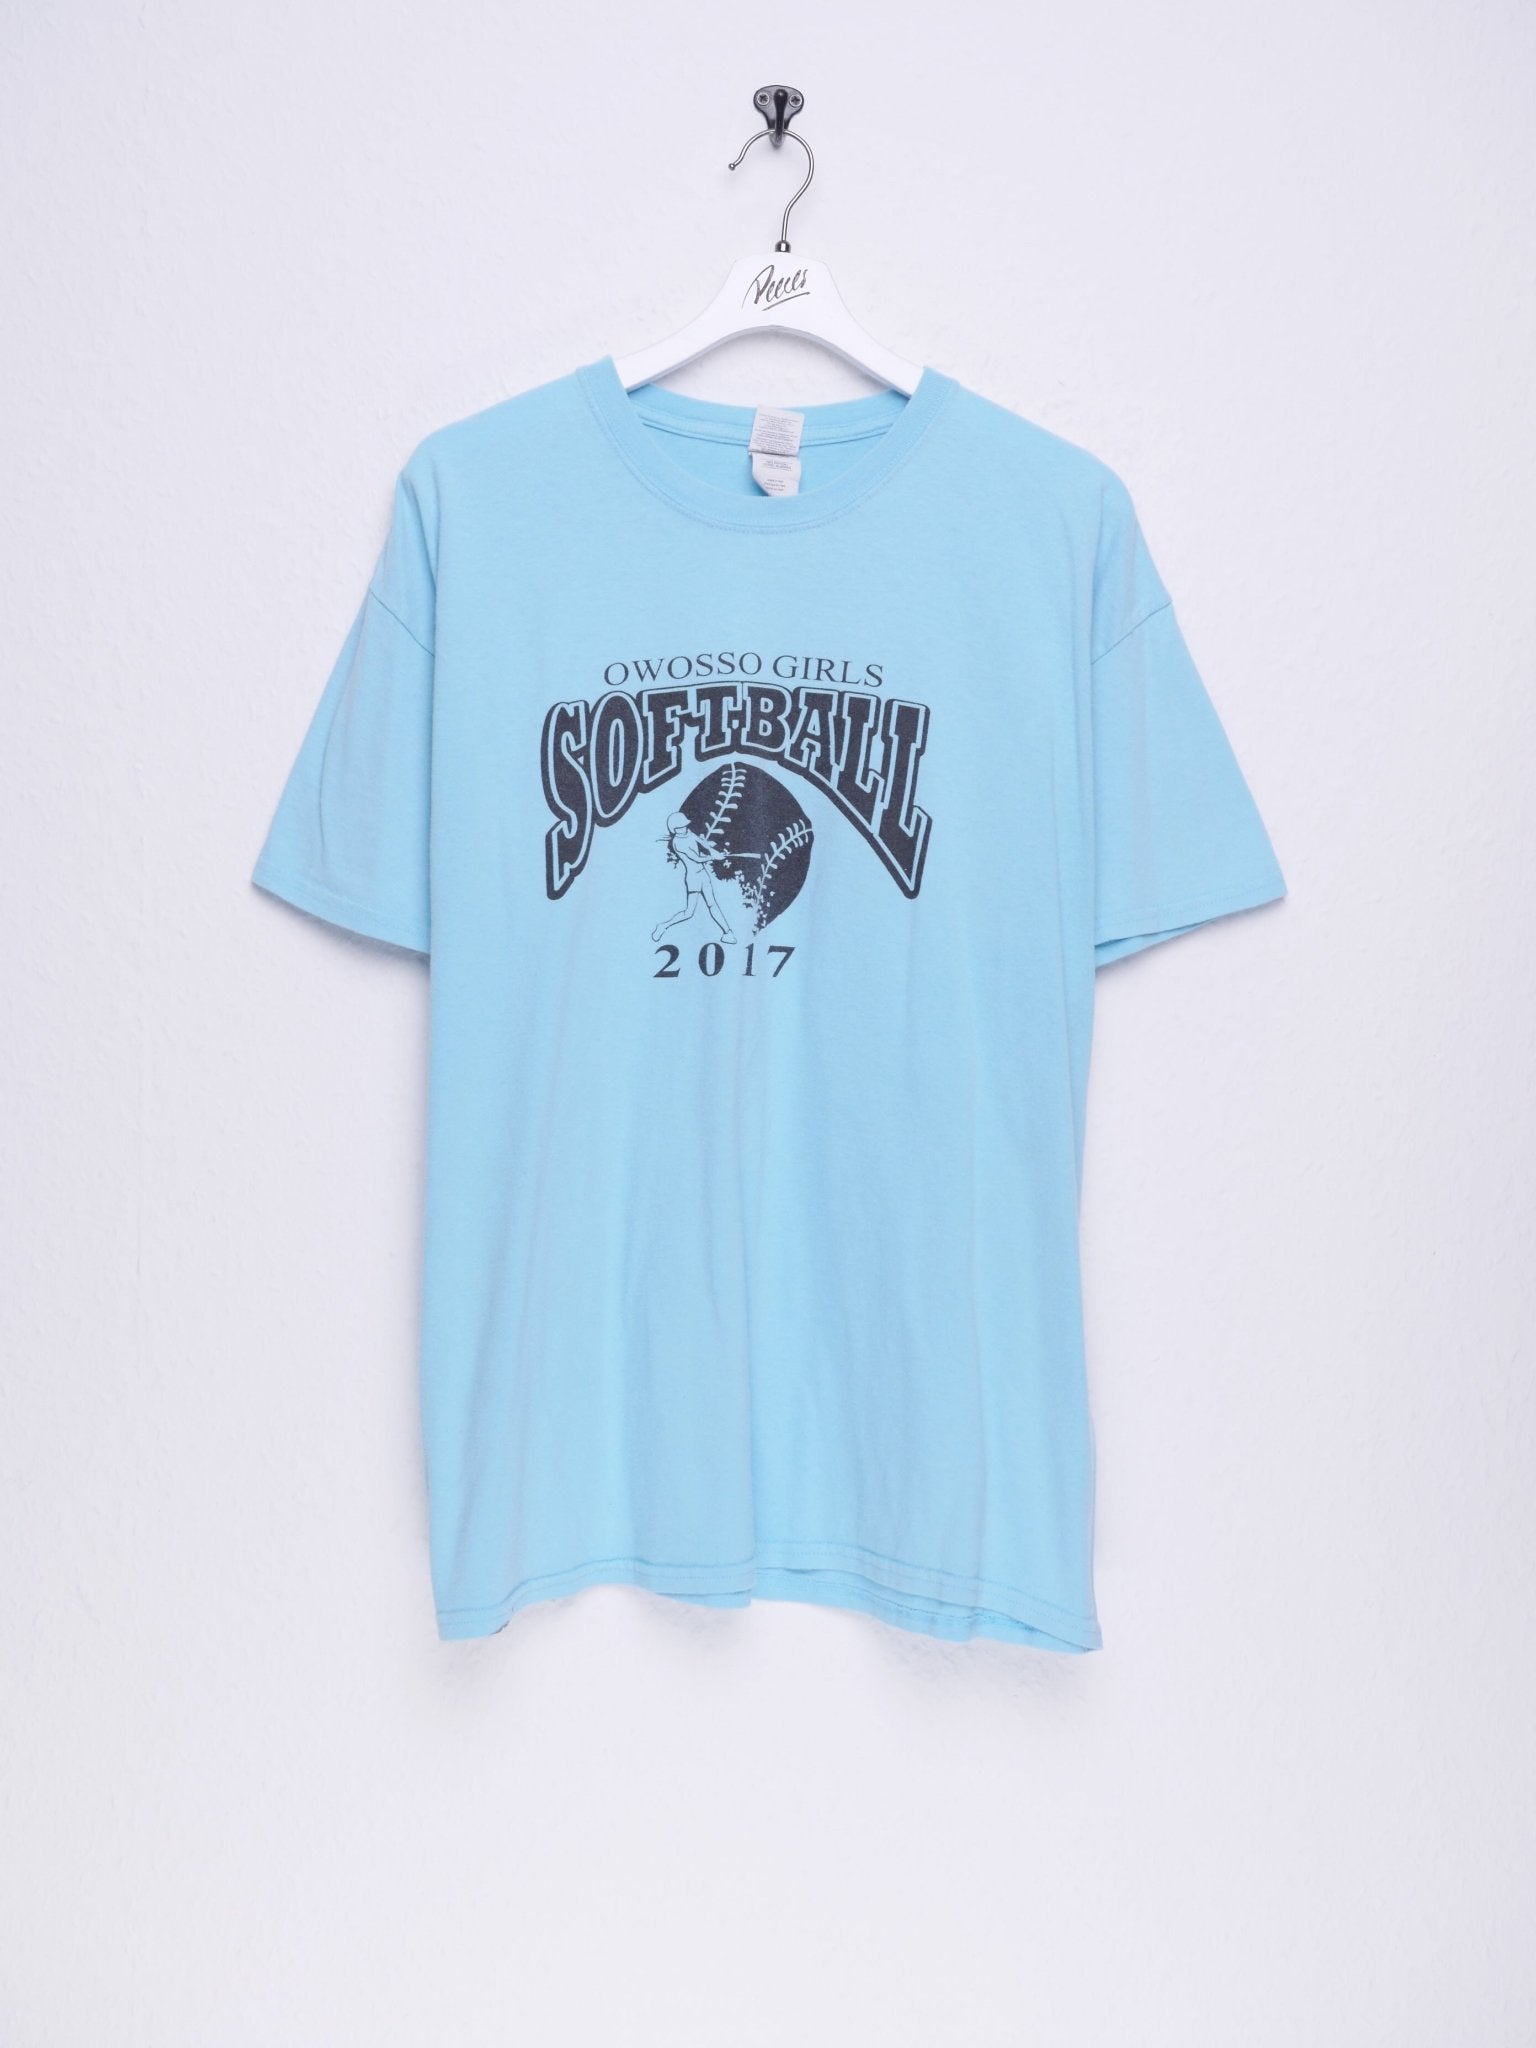 printed 'Owosso Girls Softball' babyblue Shirt - Peeces